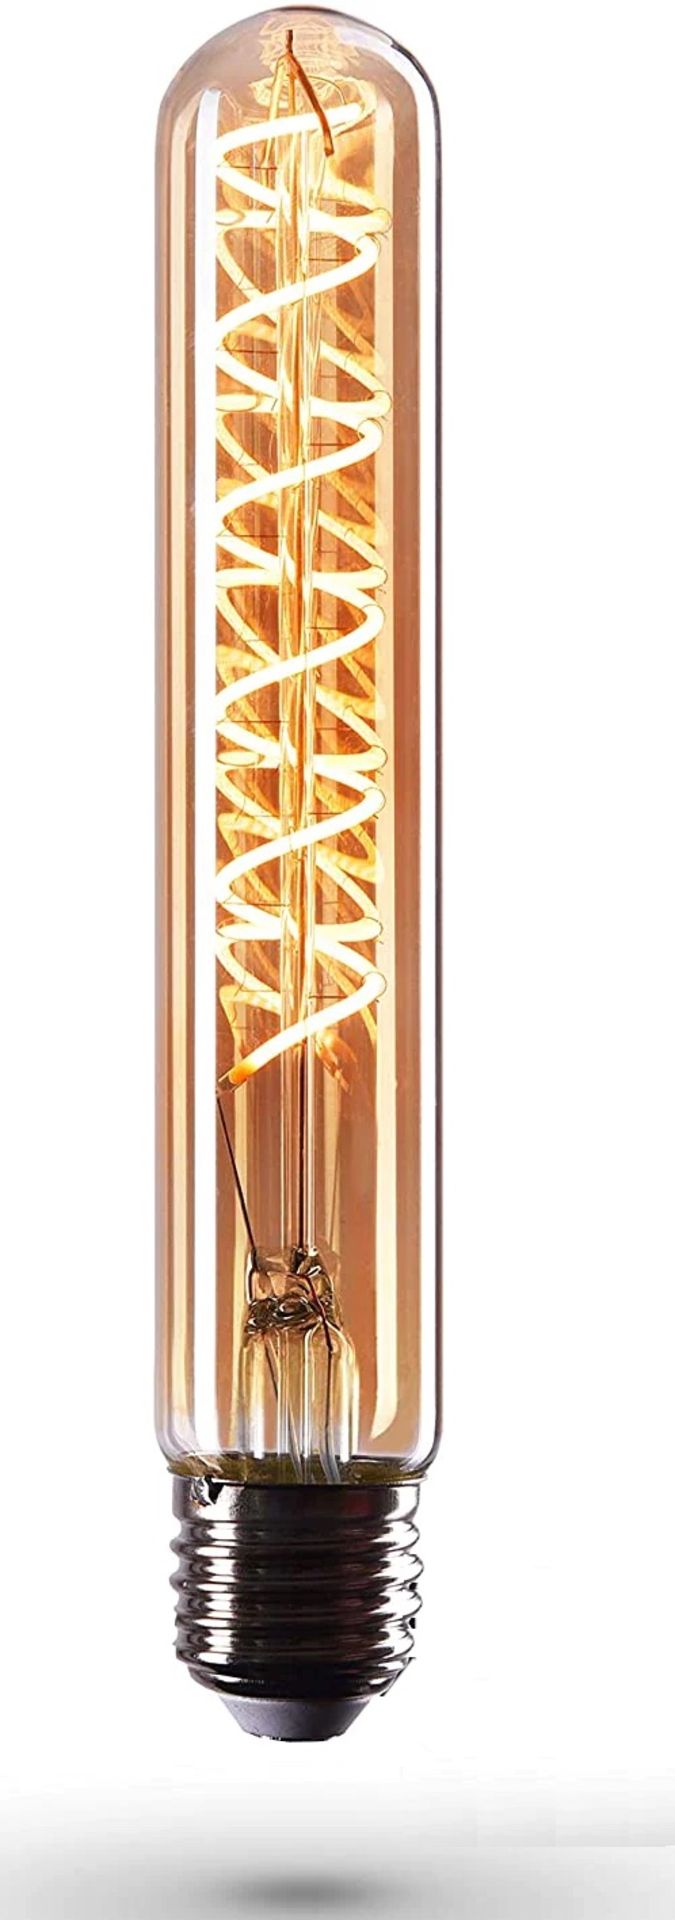 12 x CROWN LED Edison Flat Pipe Lightbulb 4W/40W Warm White - NEW & BOXED - BIG RRP! - Image 5 of 8